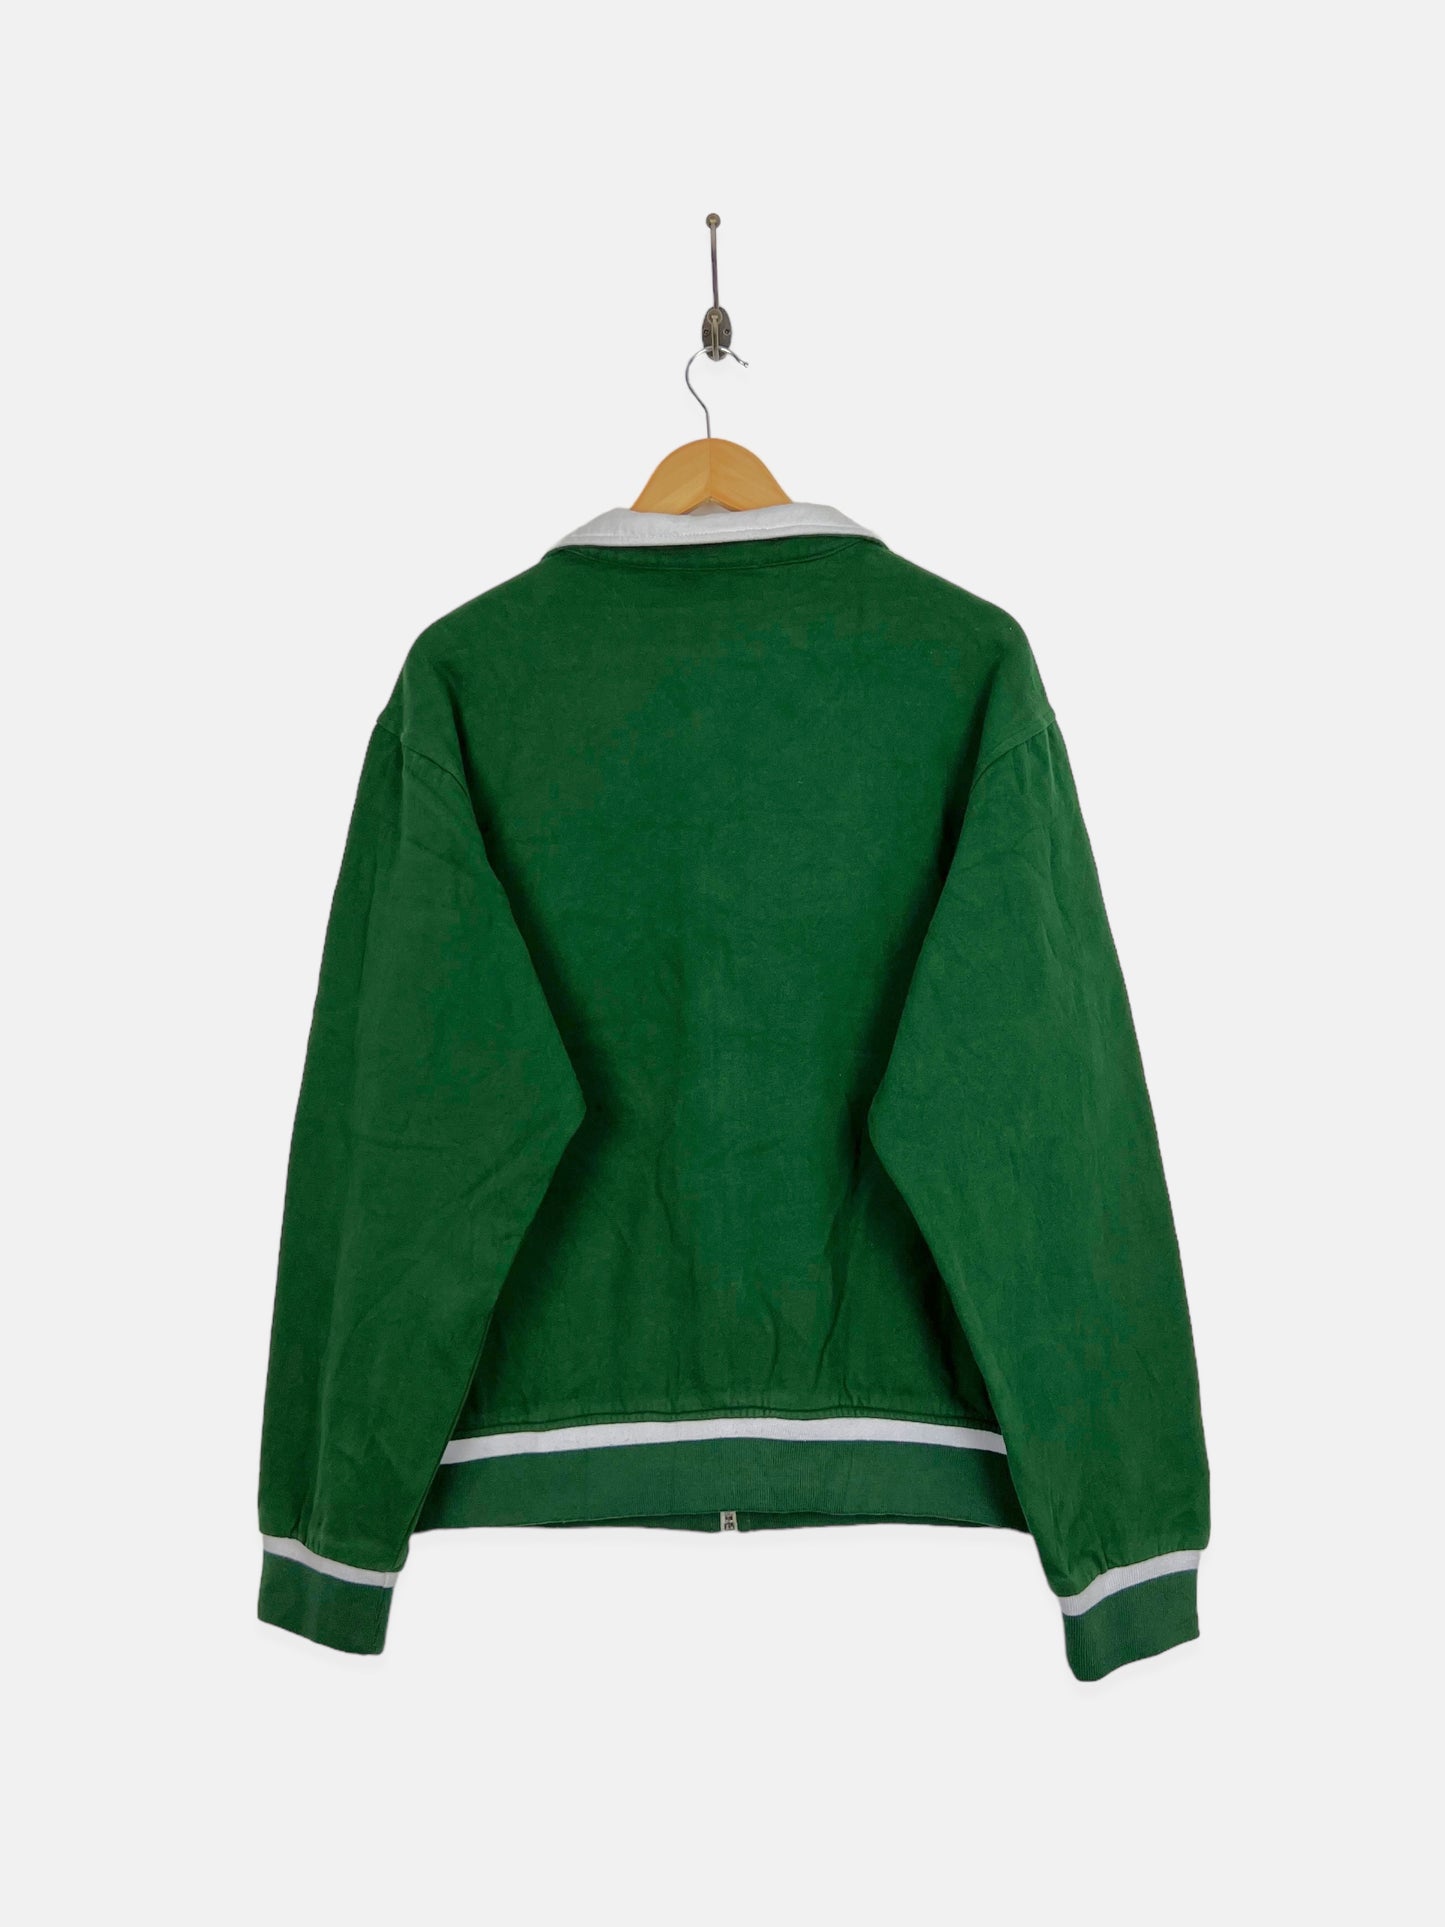 90's Heineken Embroidered Vintage Zip-Up Sweatshirt/Jacket Size L